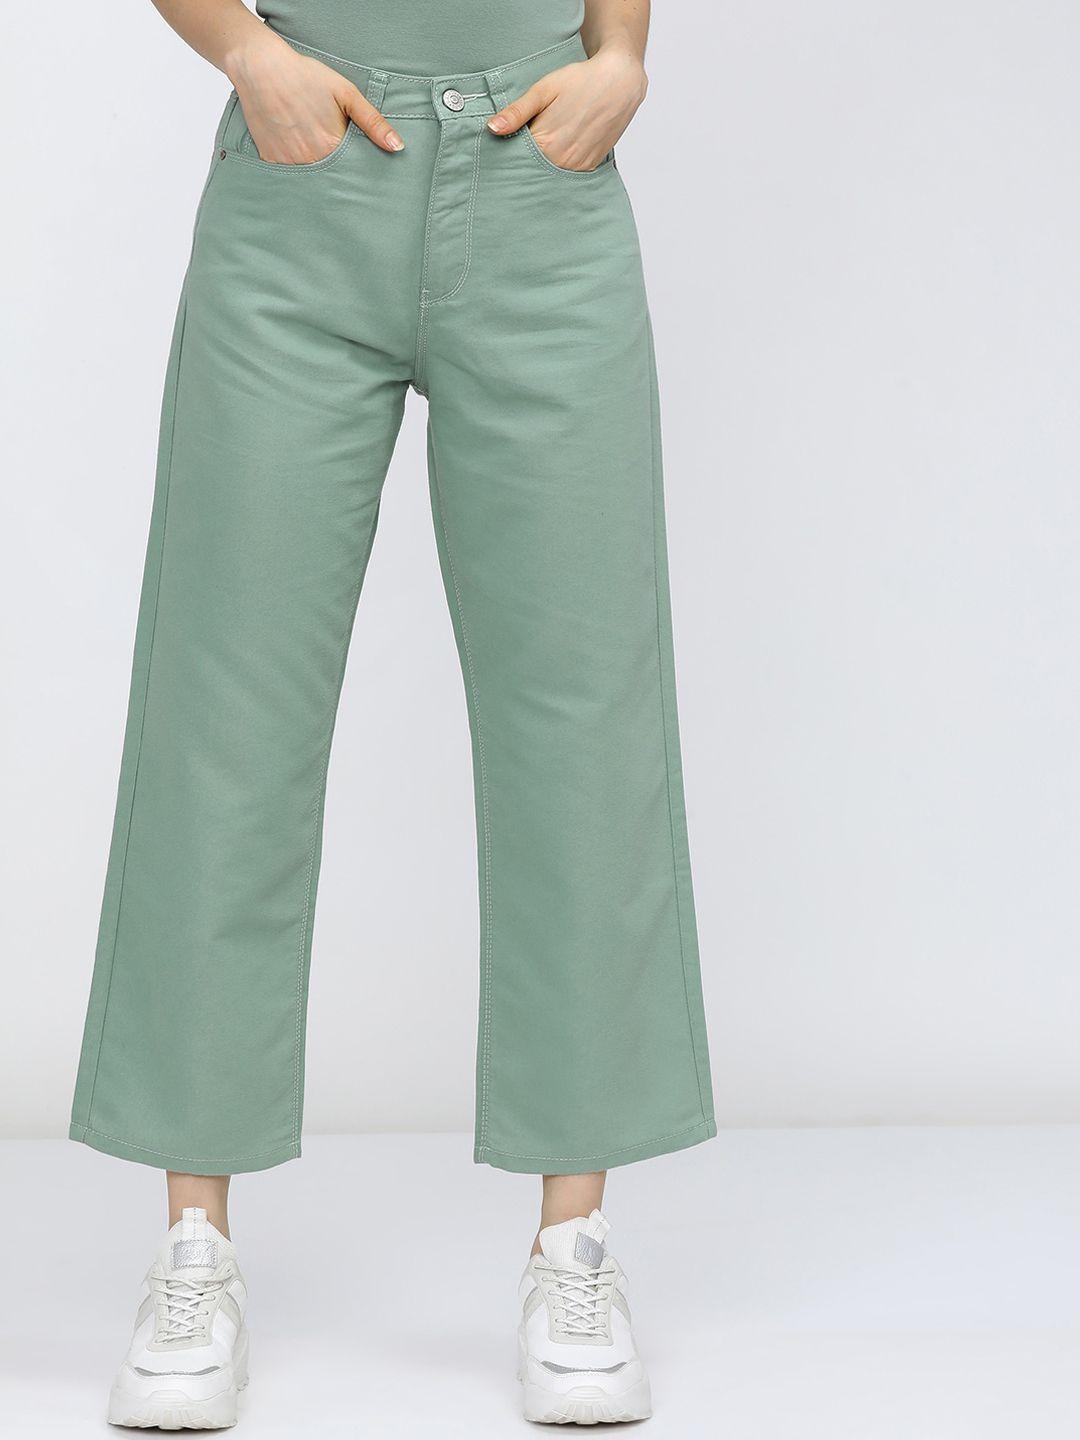 tokyo talkies women mint green wide leg stretchable jeans